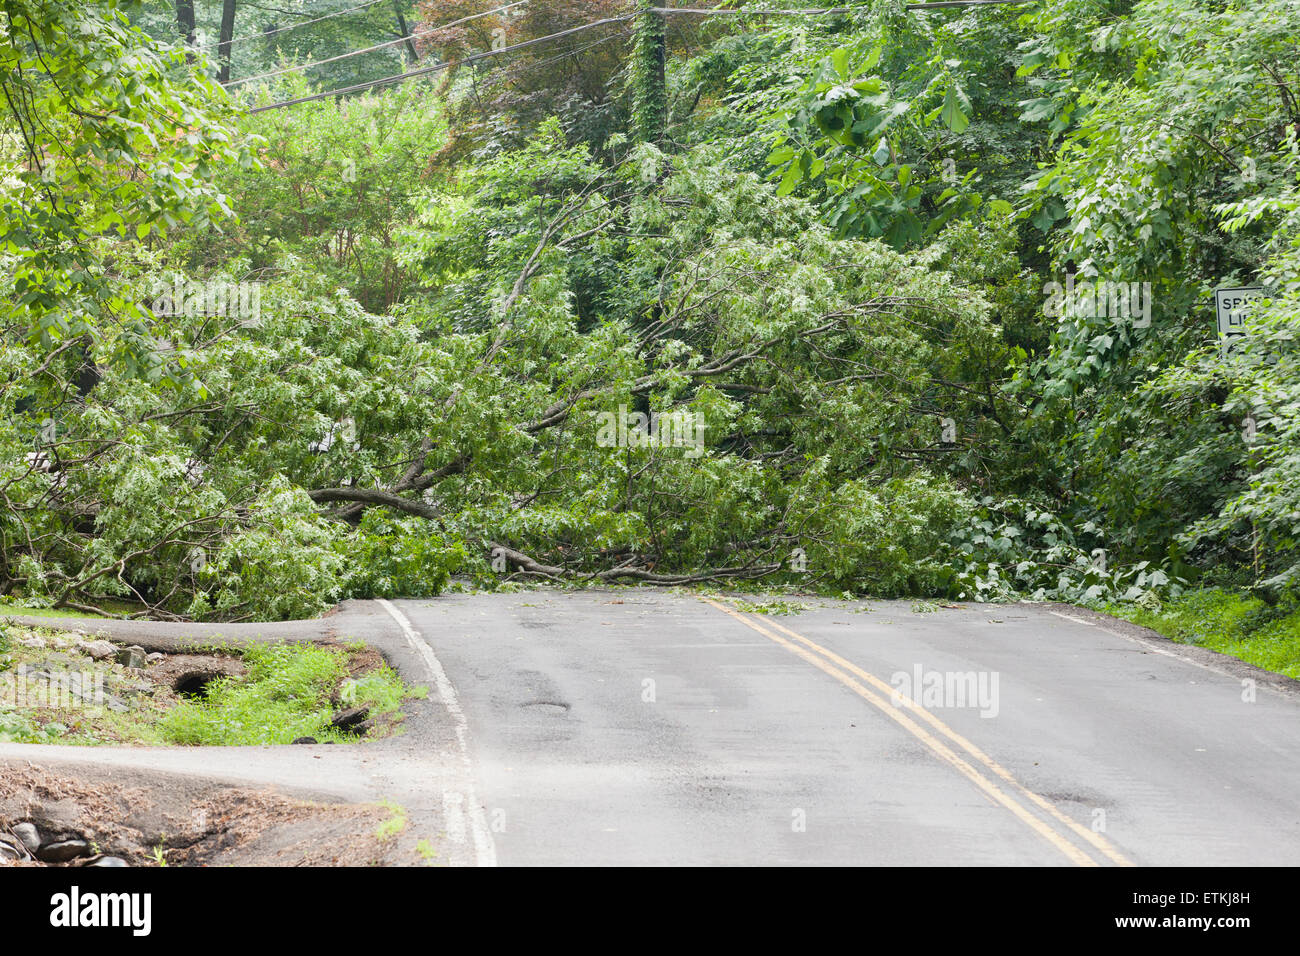 Fallen tree in roadway - USA Stock Photo